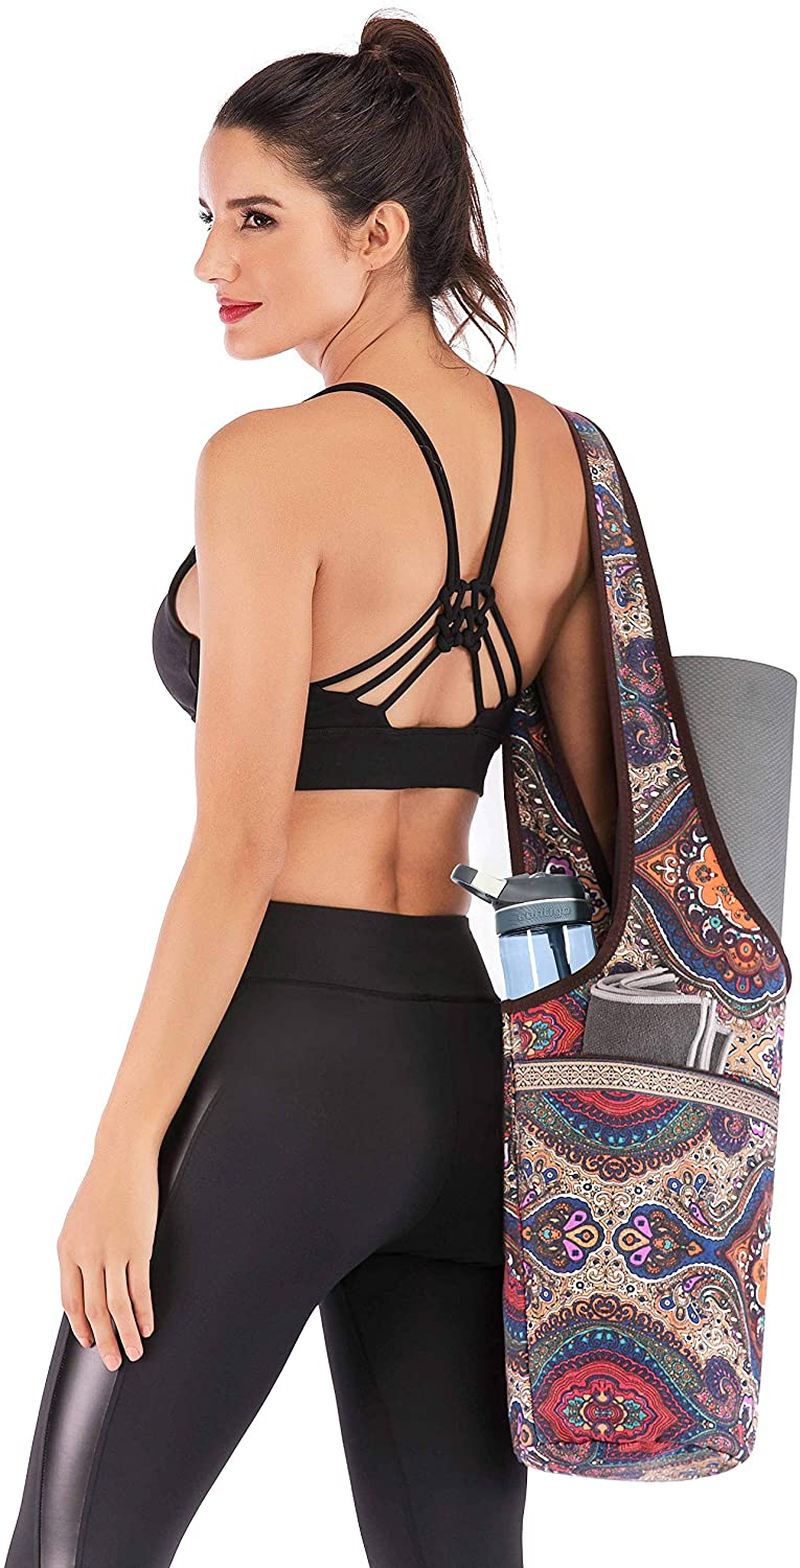 Ewedoos Yoga Mat Bag with Large Size Pocket and Zipper Pocket, Fit Most Size Mats